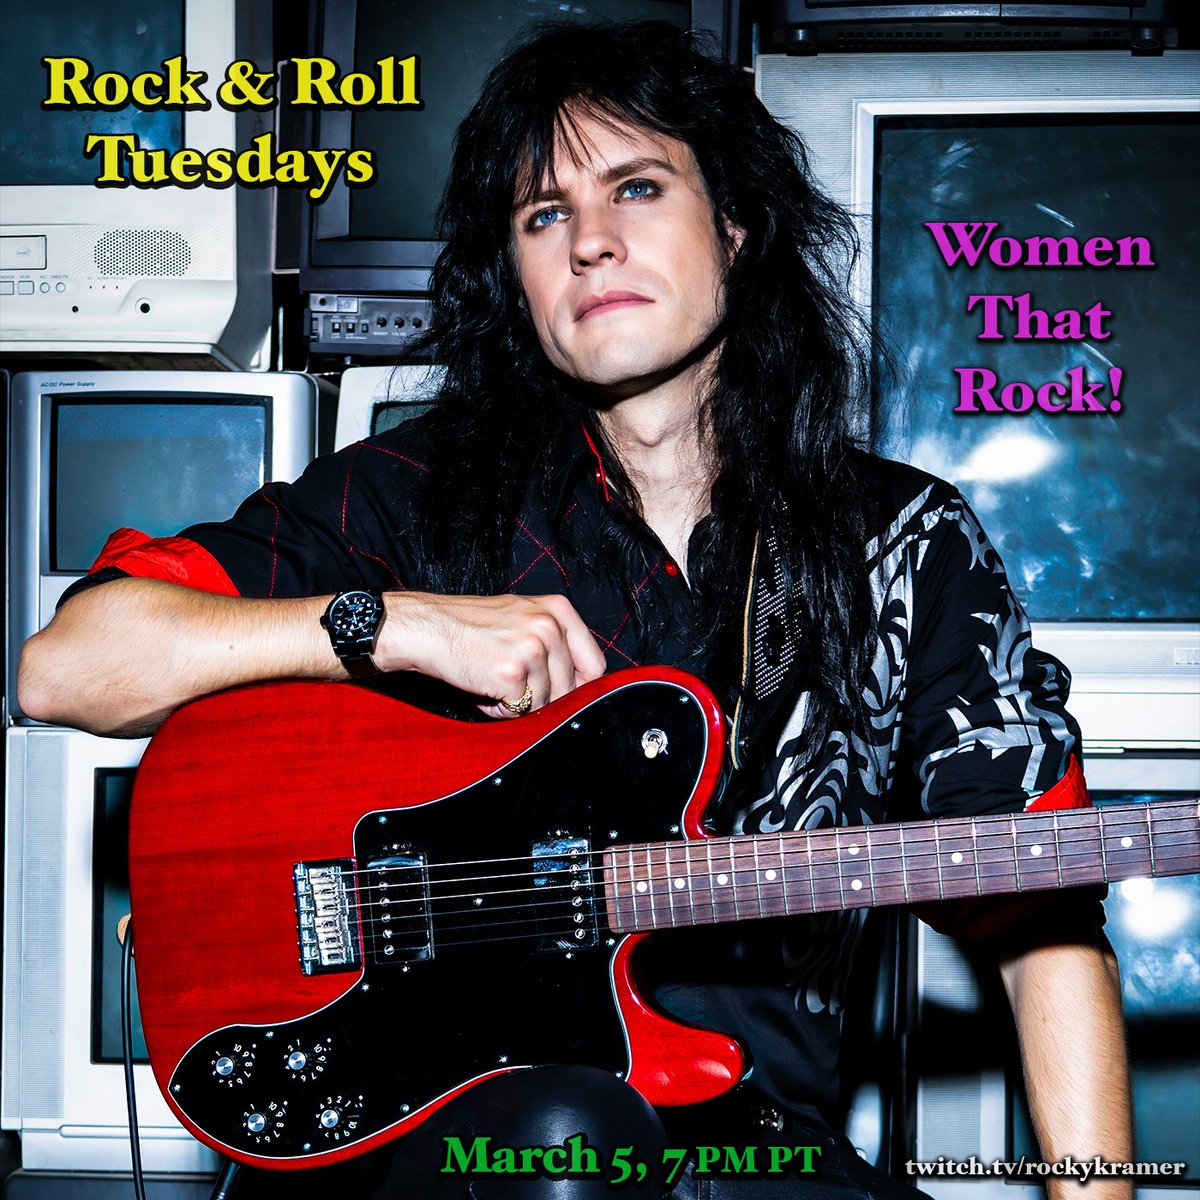 Rock & Roll Tuesdays: Women That Rock! March 5, 7 PM PT on Twitch! #RockNRoll